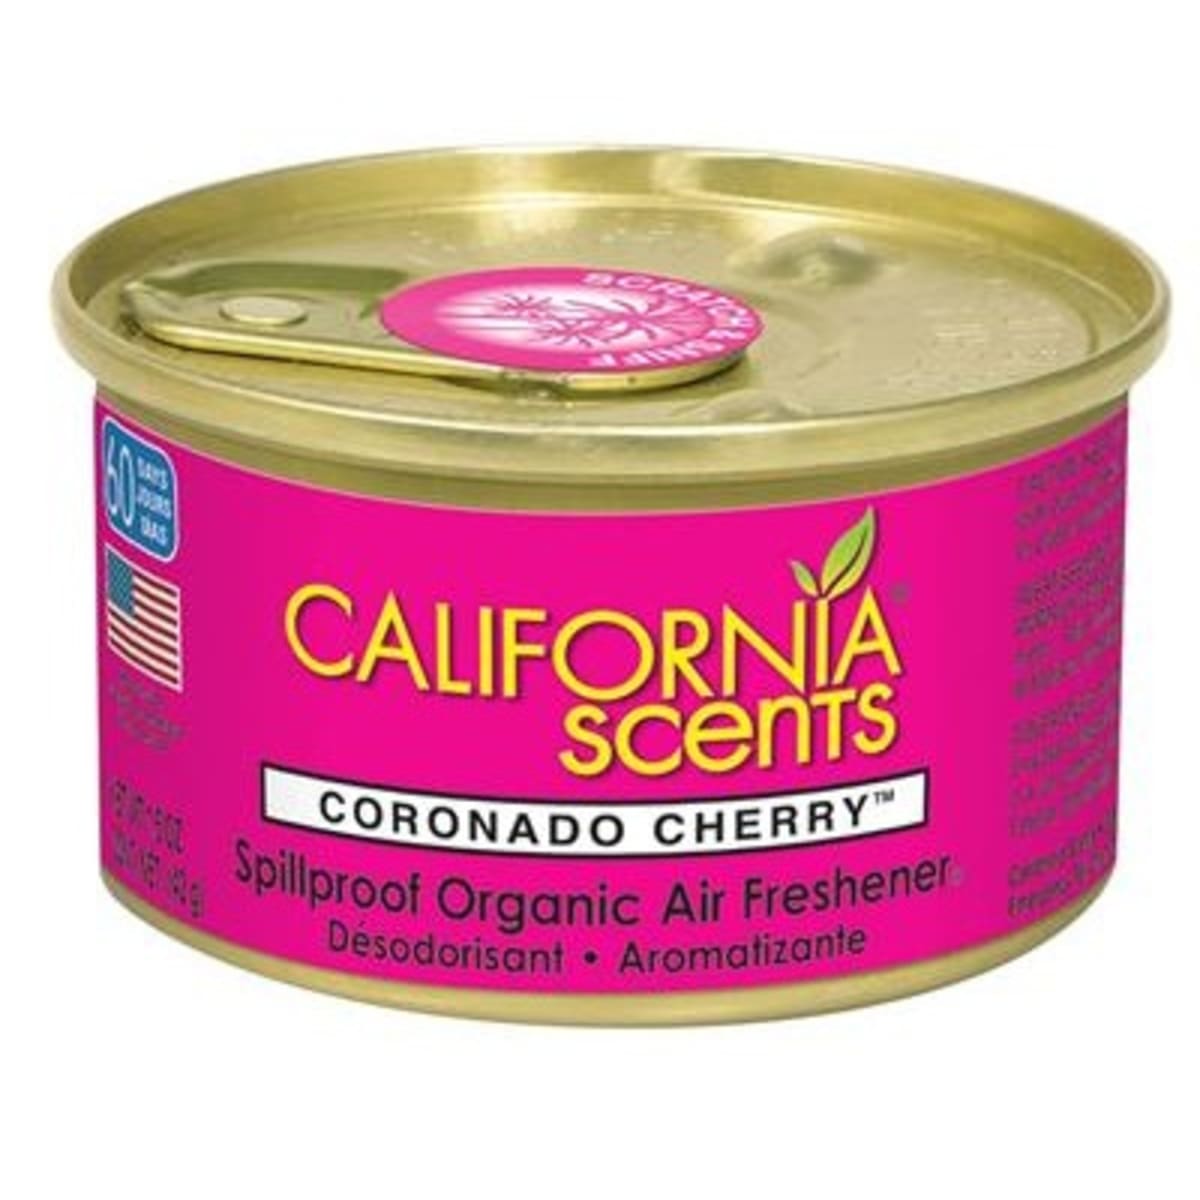 California Scents Air Freshener - Coronado Cherry - 42g